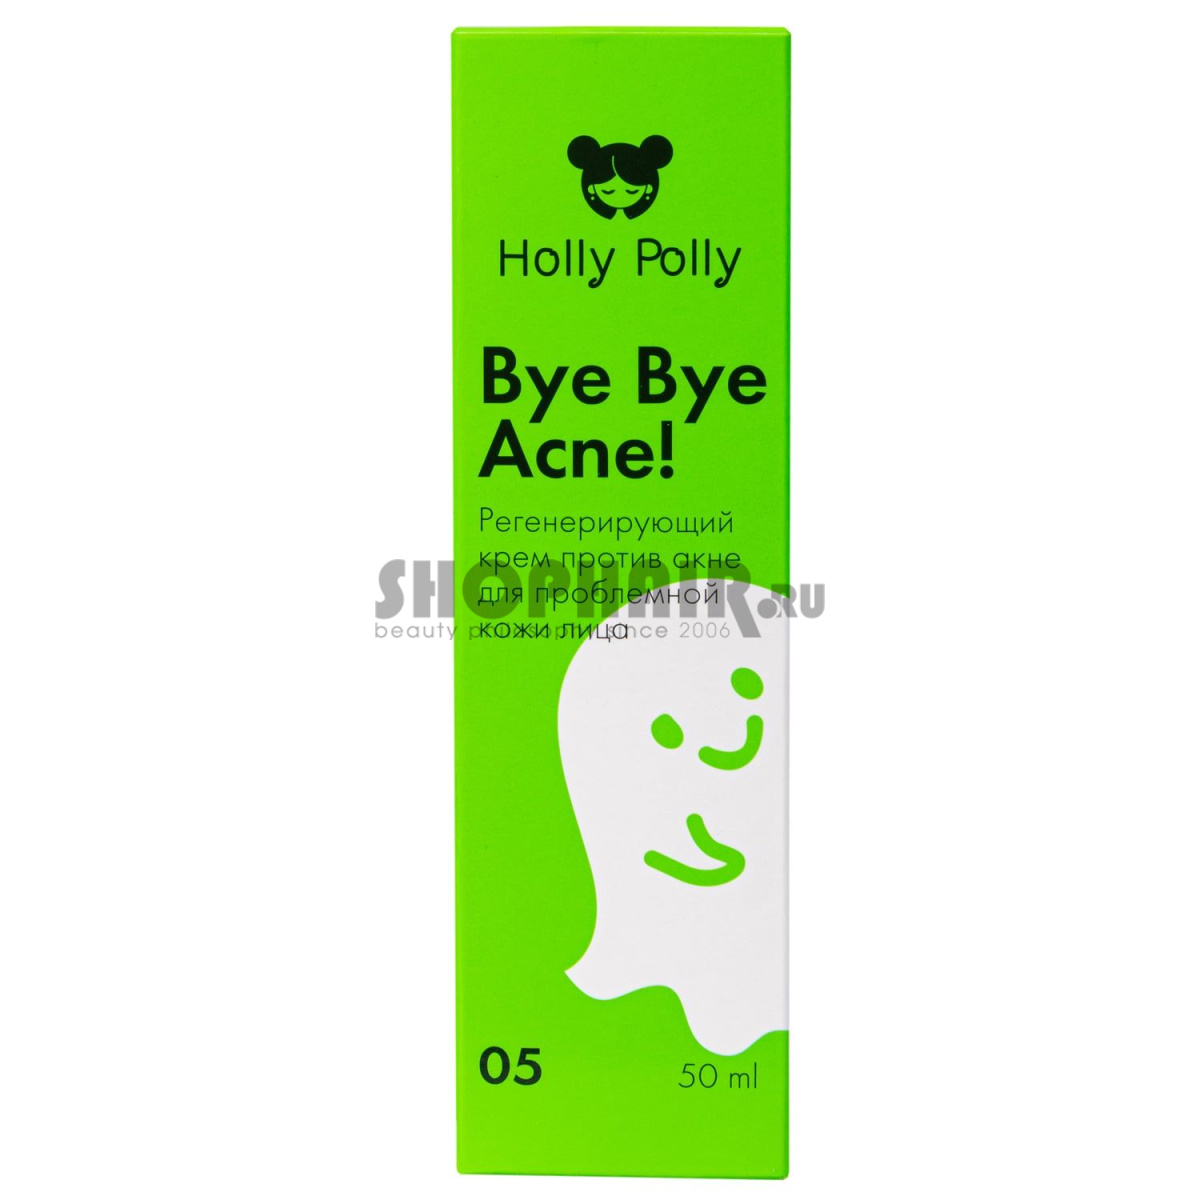 Holly Polly Bye Bye Acne! - Регенерирующий крем против акне и воспалений 50 мл Holly Polly (Россия) купить по цене 249 руб.